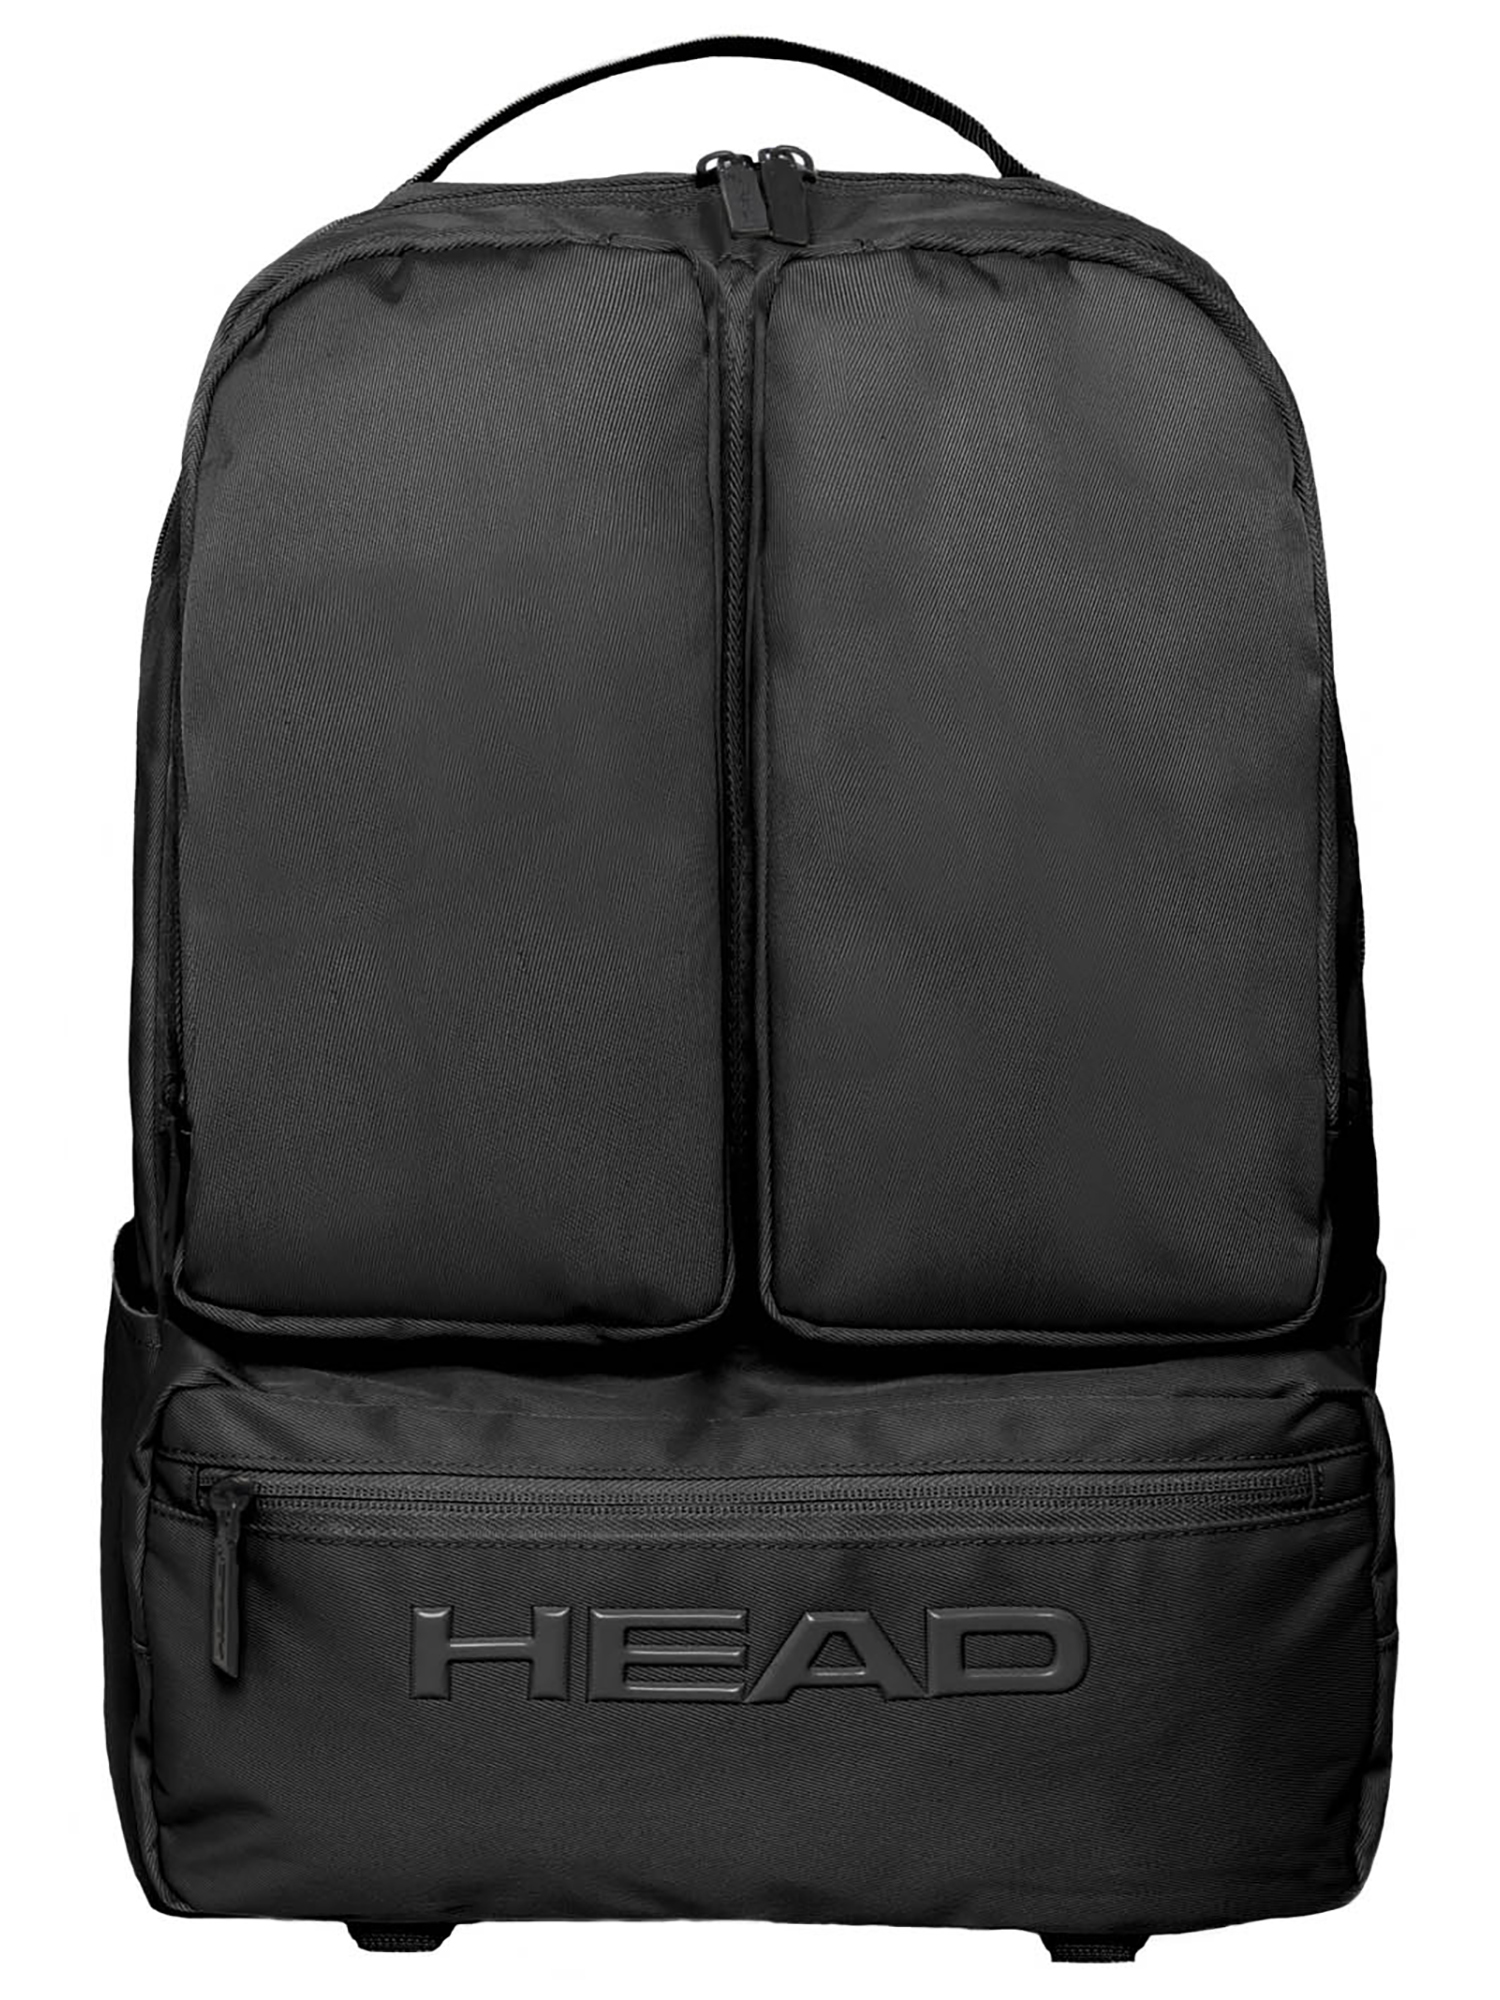 Рюкзак HEAD Alley Backpack, черный рюкзак head elite backpack 2022 черный белый